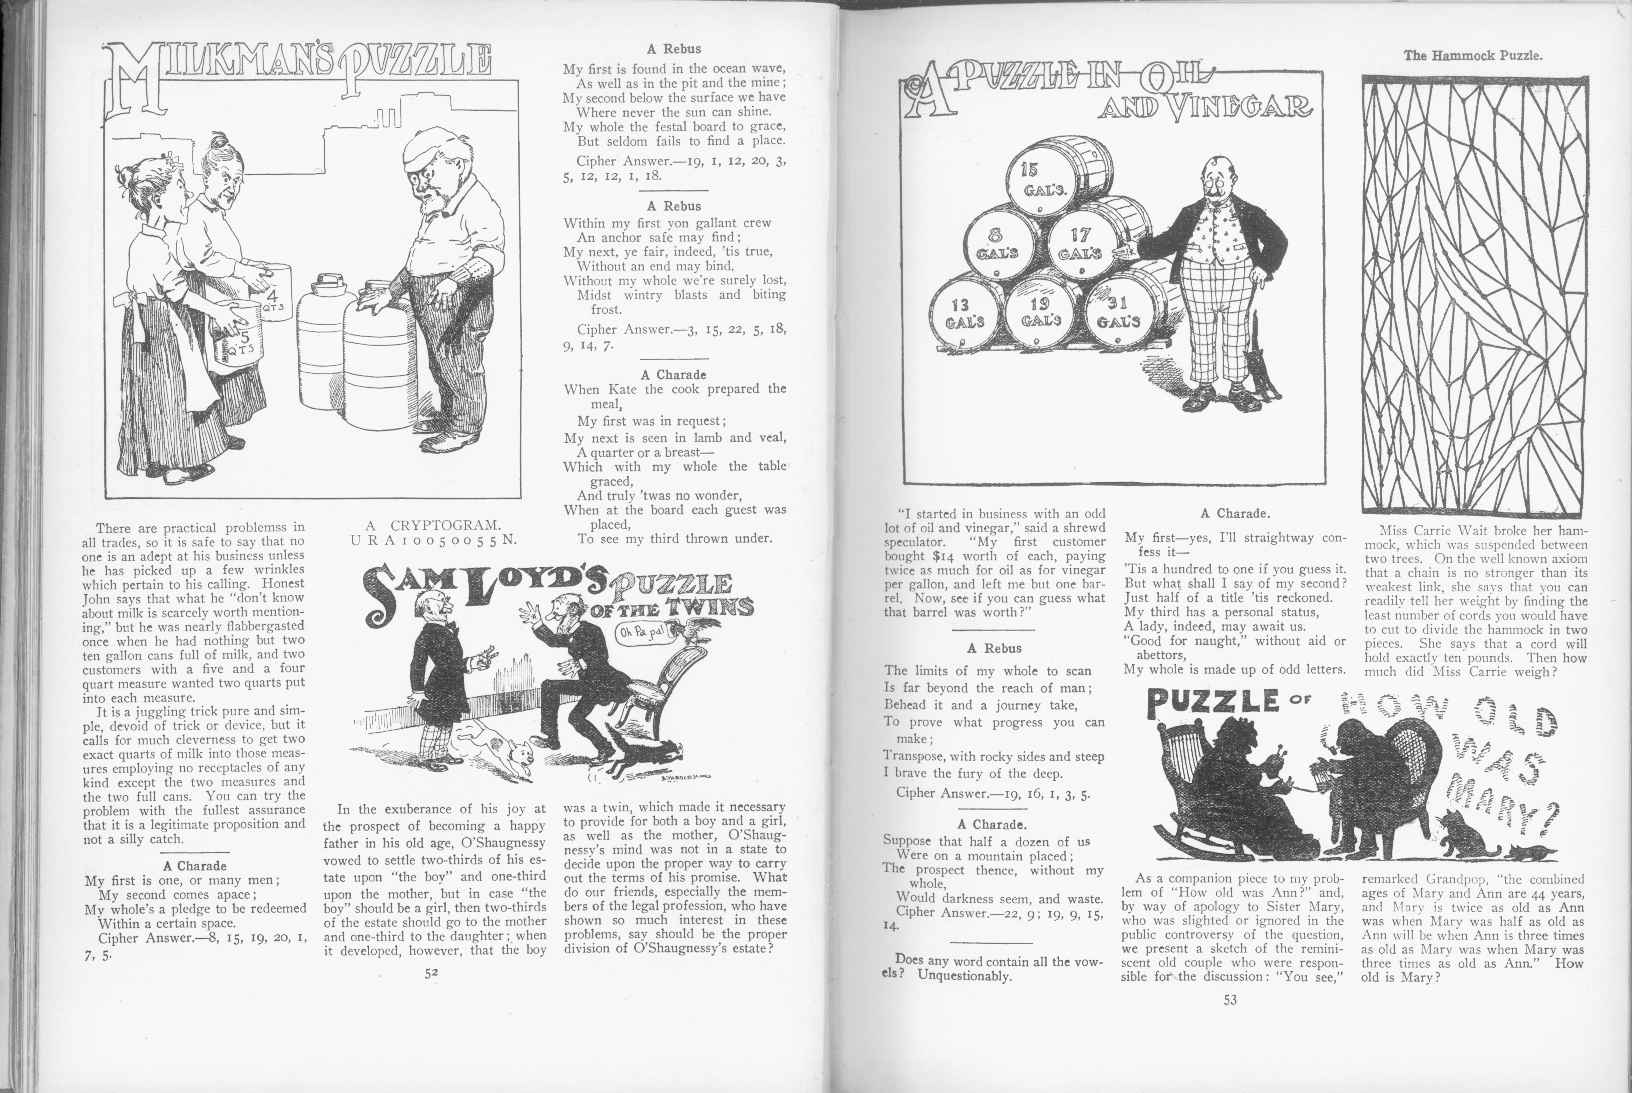 Sam Loyd - Cyclopedia of Puzzles - page 52-53